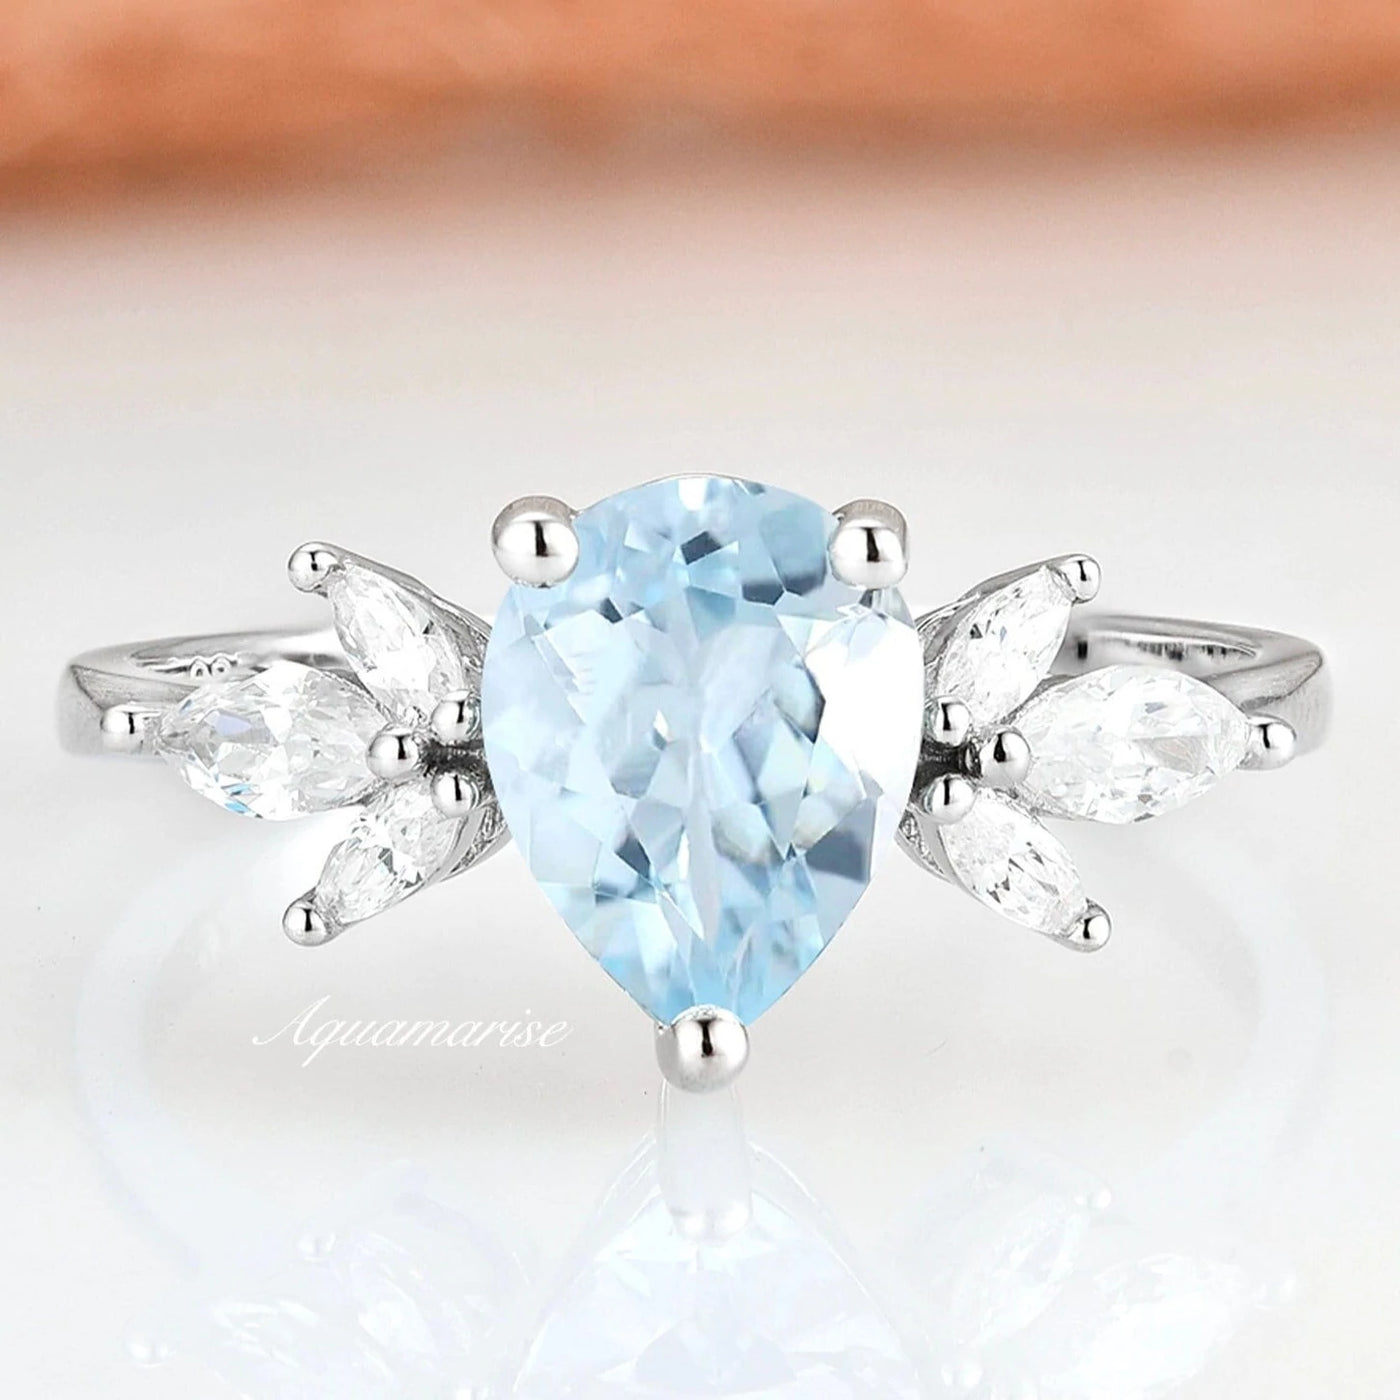 Gemstone engagement rings